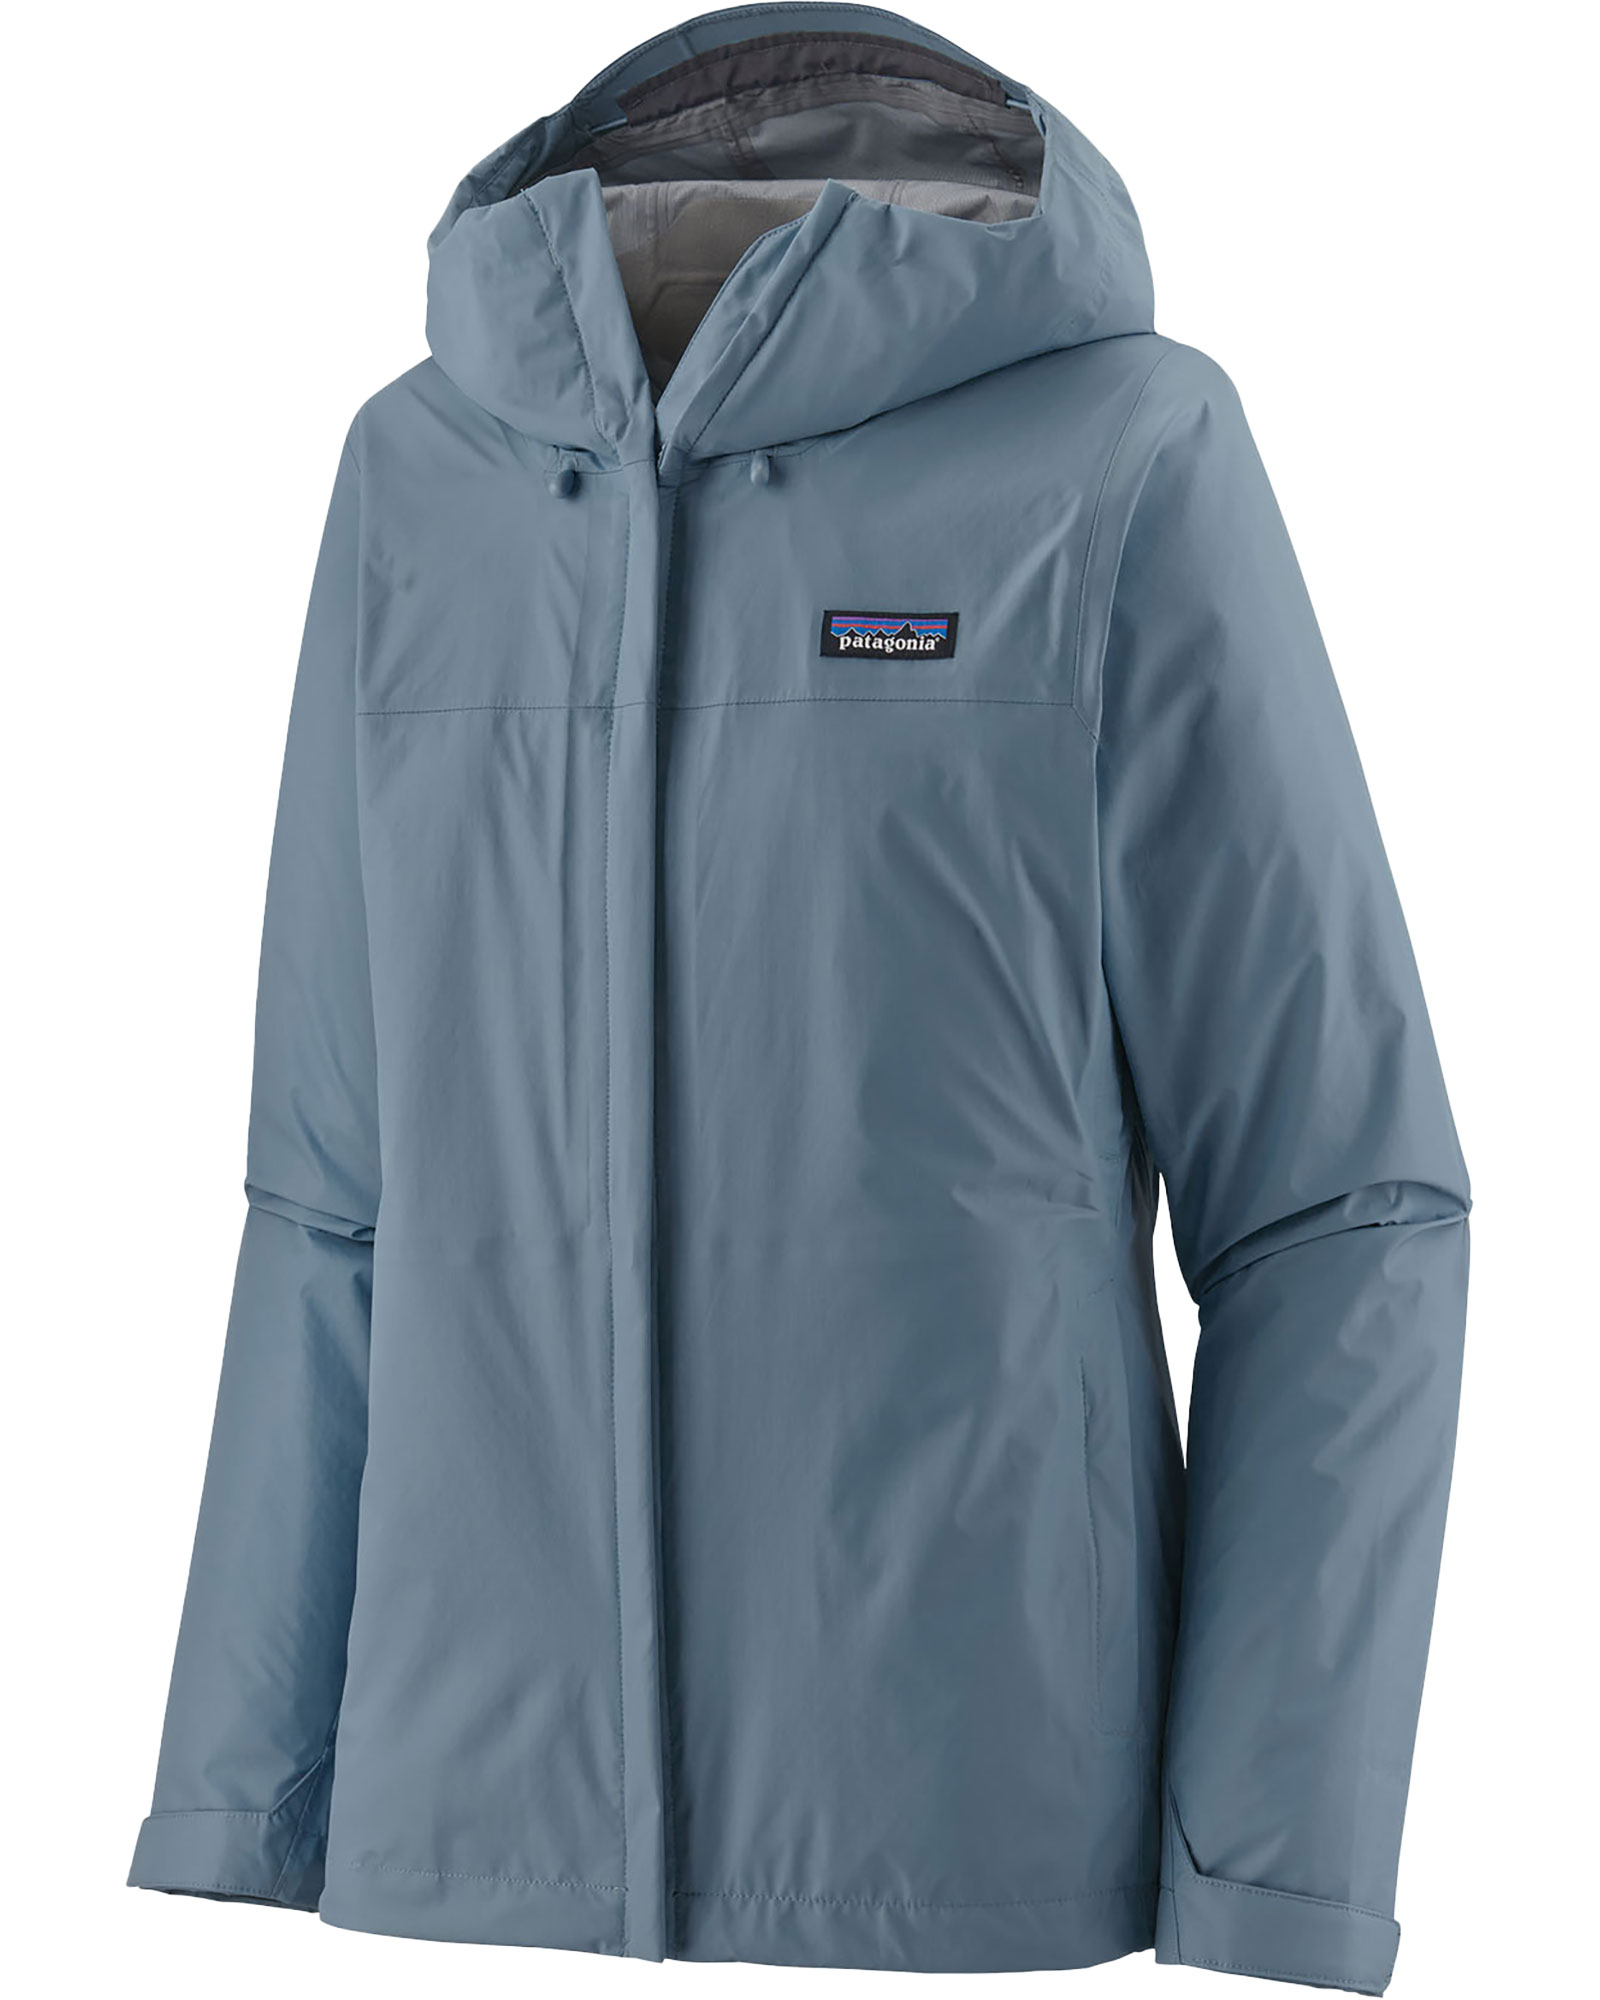 Patagonia Women’s Torrentshell 3L Jacket - Light Plume Grey S